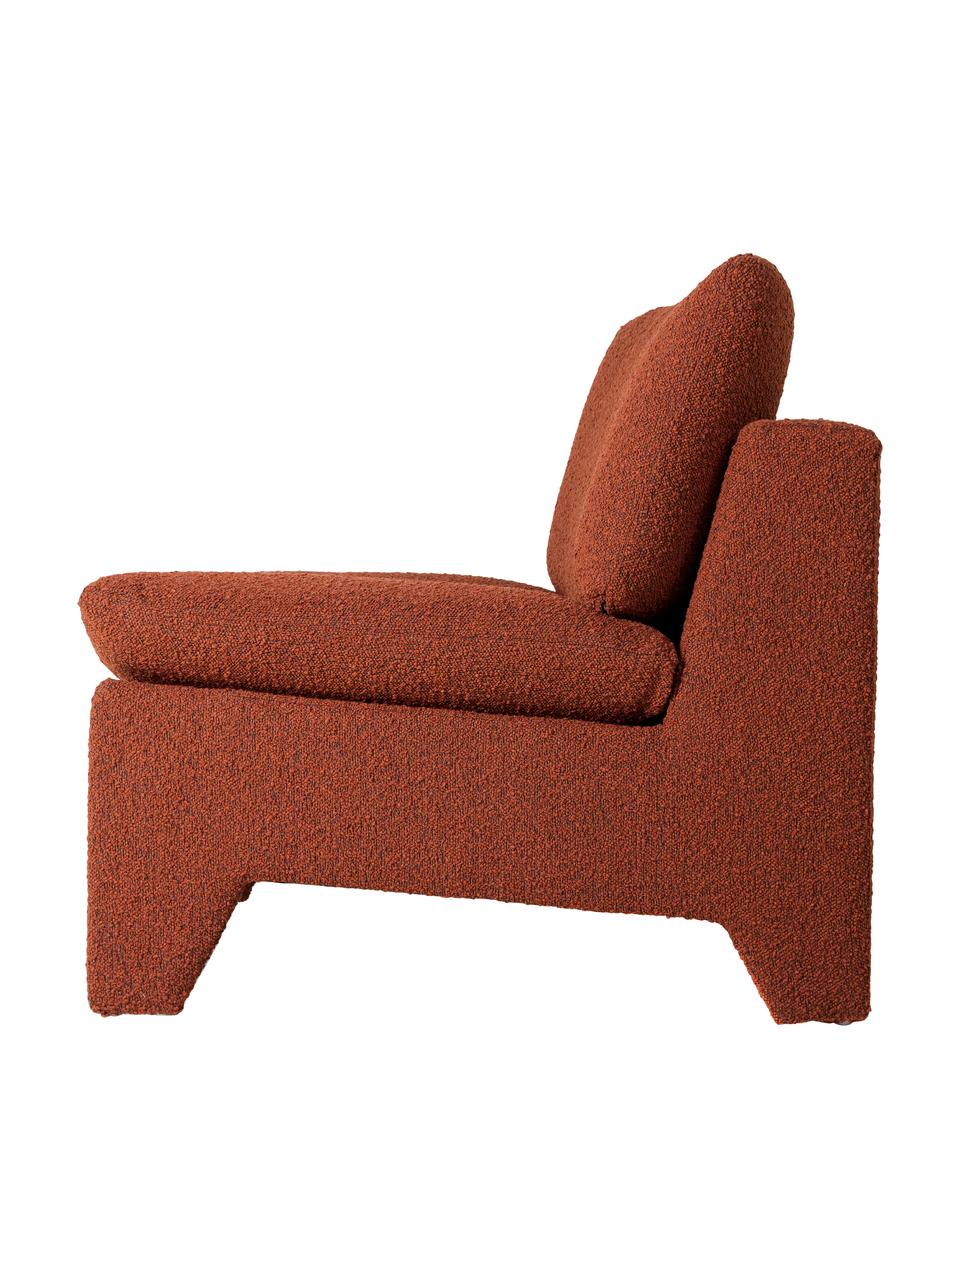 Bouclé loungefauteuil Karl in terracotta, Bekleding: 92% polyester, 8% katoen, Frame: hout, Terracottakleurig, B 84 x D 82 cm